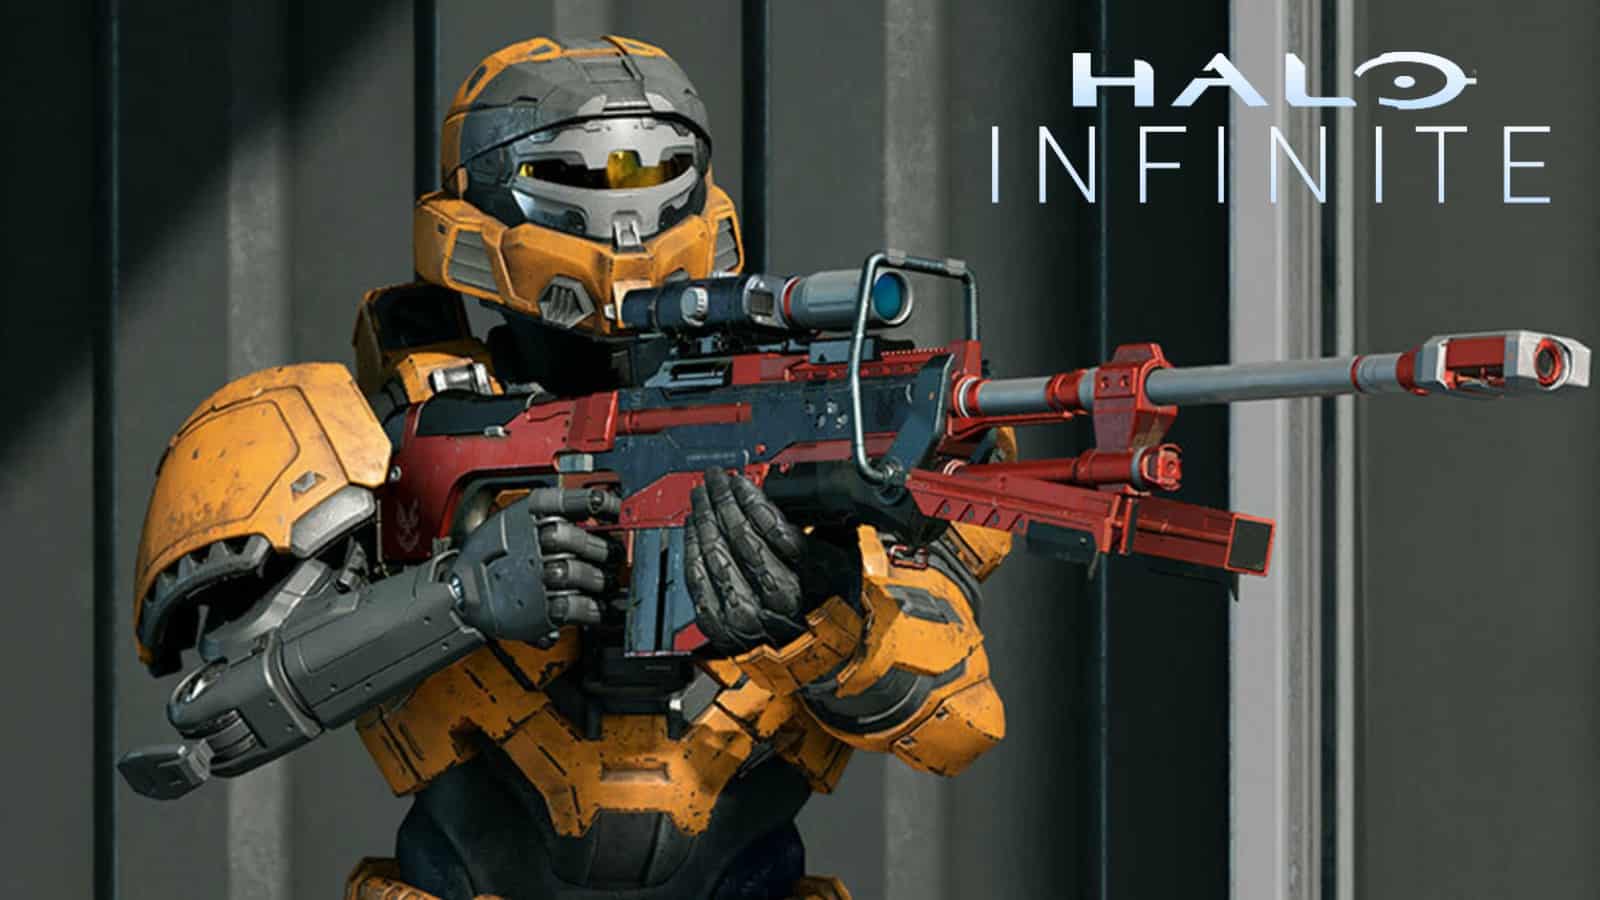 Halo Infinite multiplayer